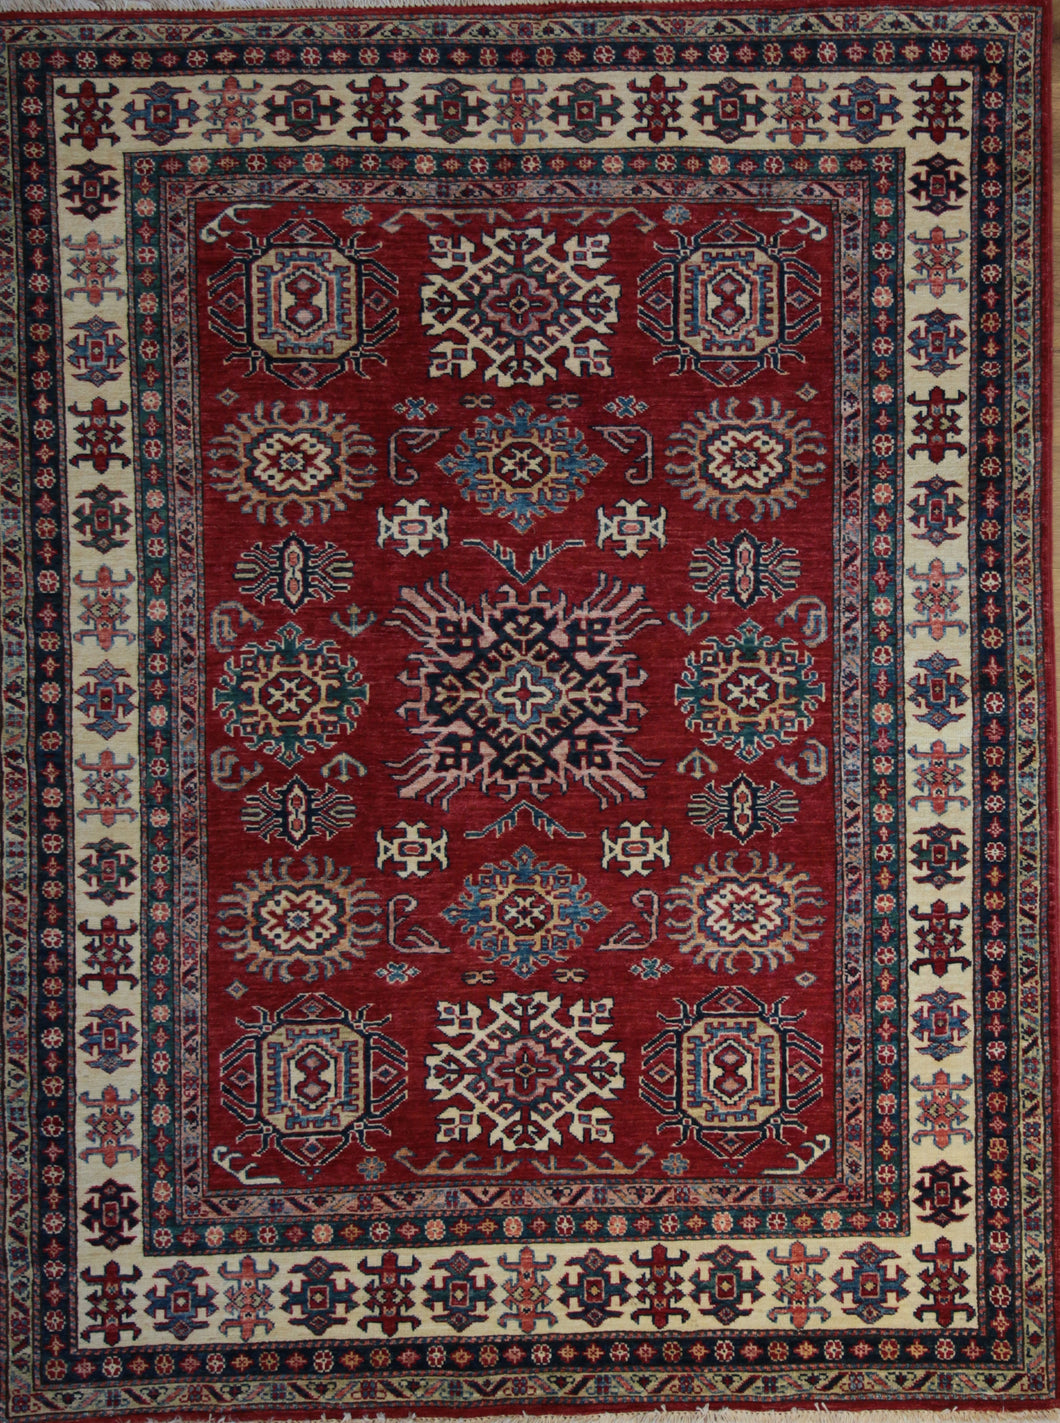 Kazak rug, super Kazak, area rugs, Oriental rugs